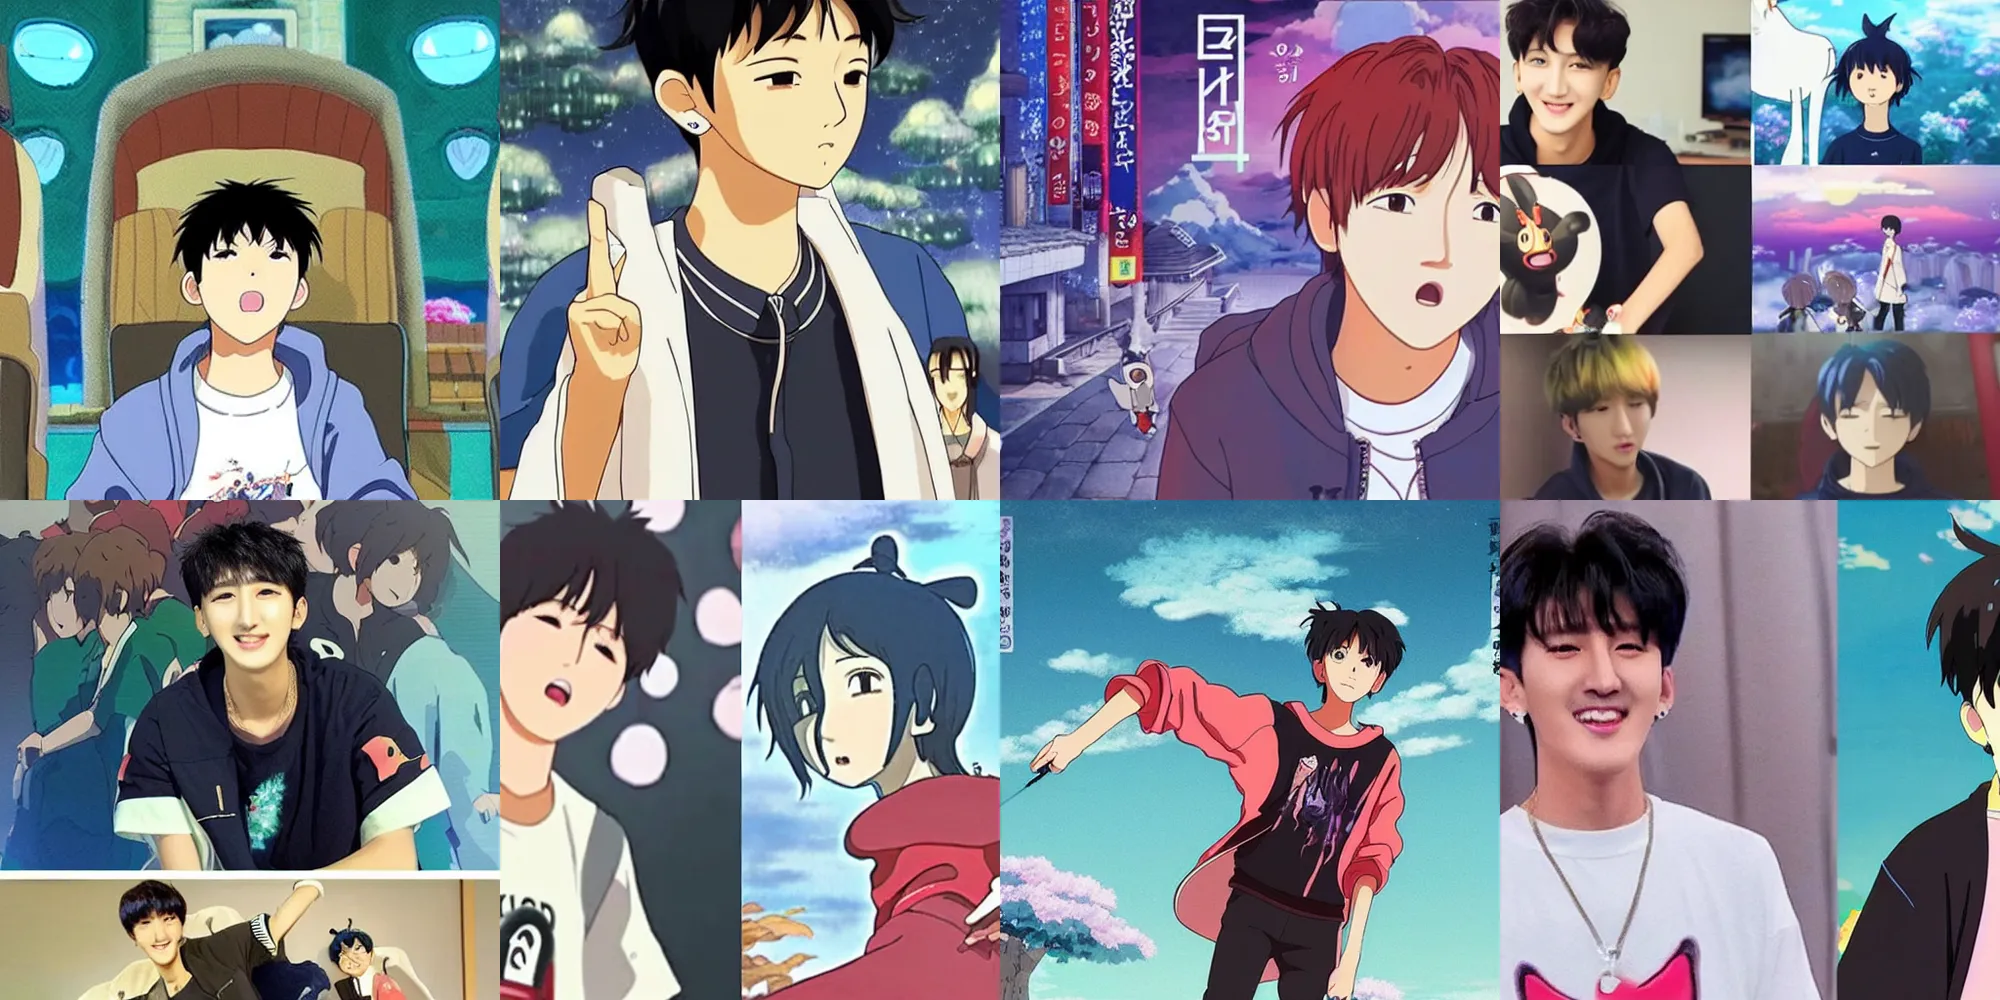 Prompt: “K-pop star Changbin in a studio Ghibli movie”